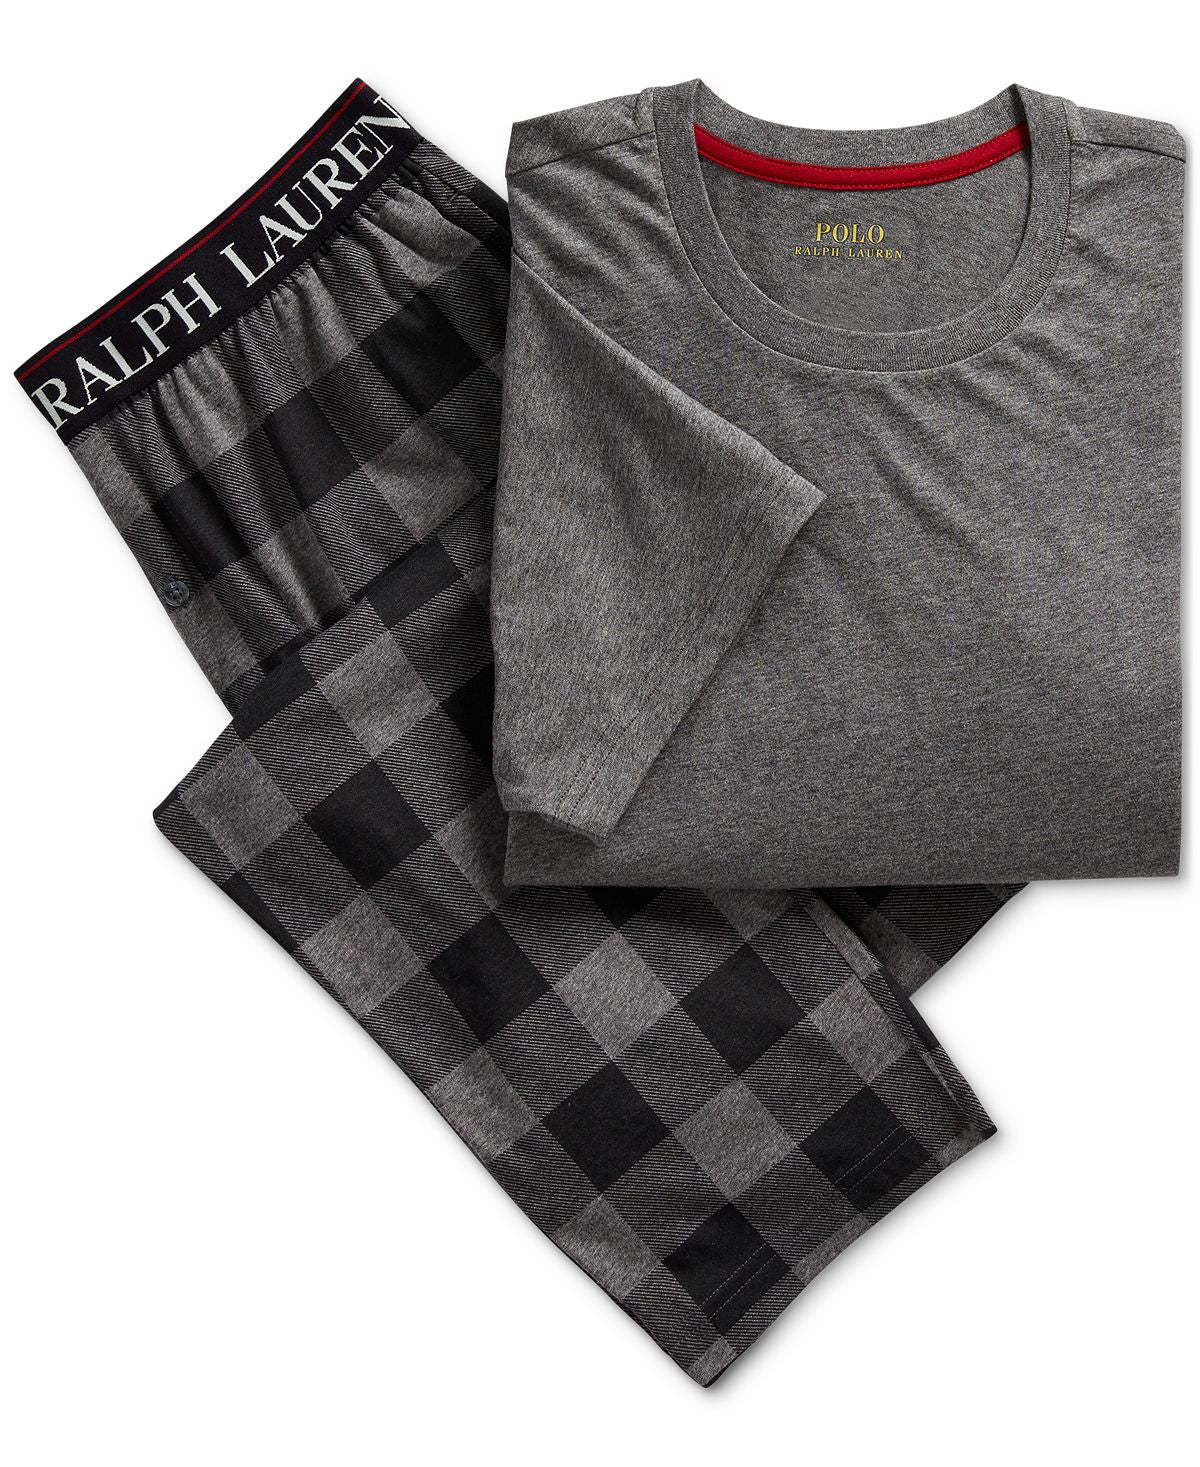 Polo Ralph Lauren Pajama Set Charcoal Buffalo Plaid